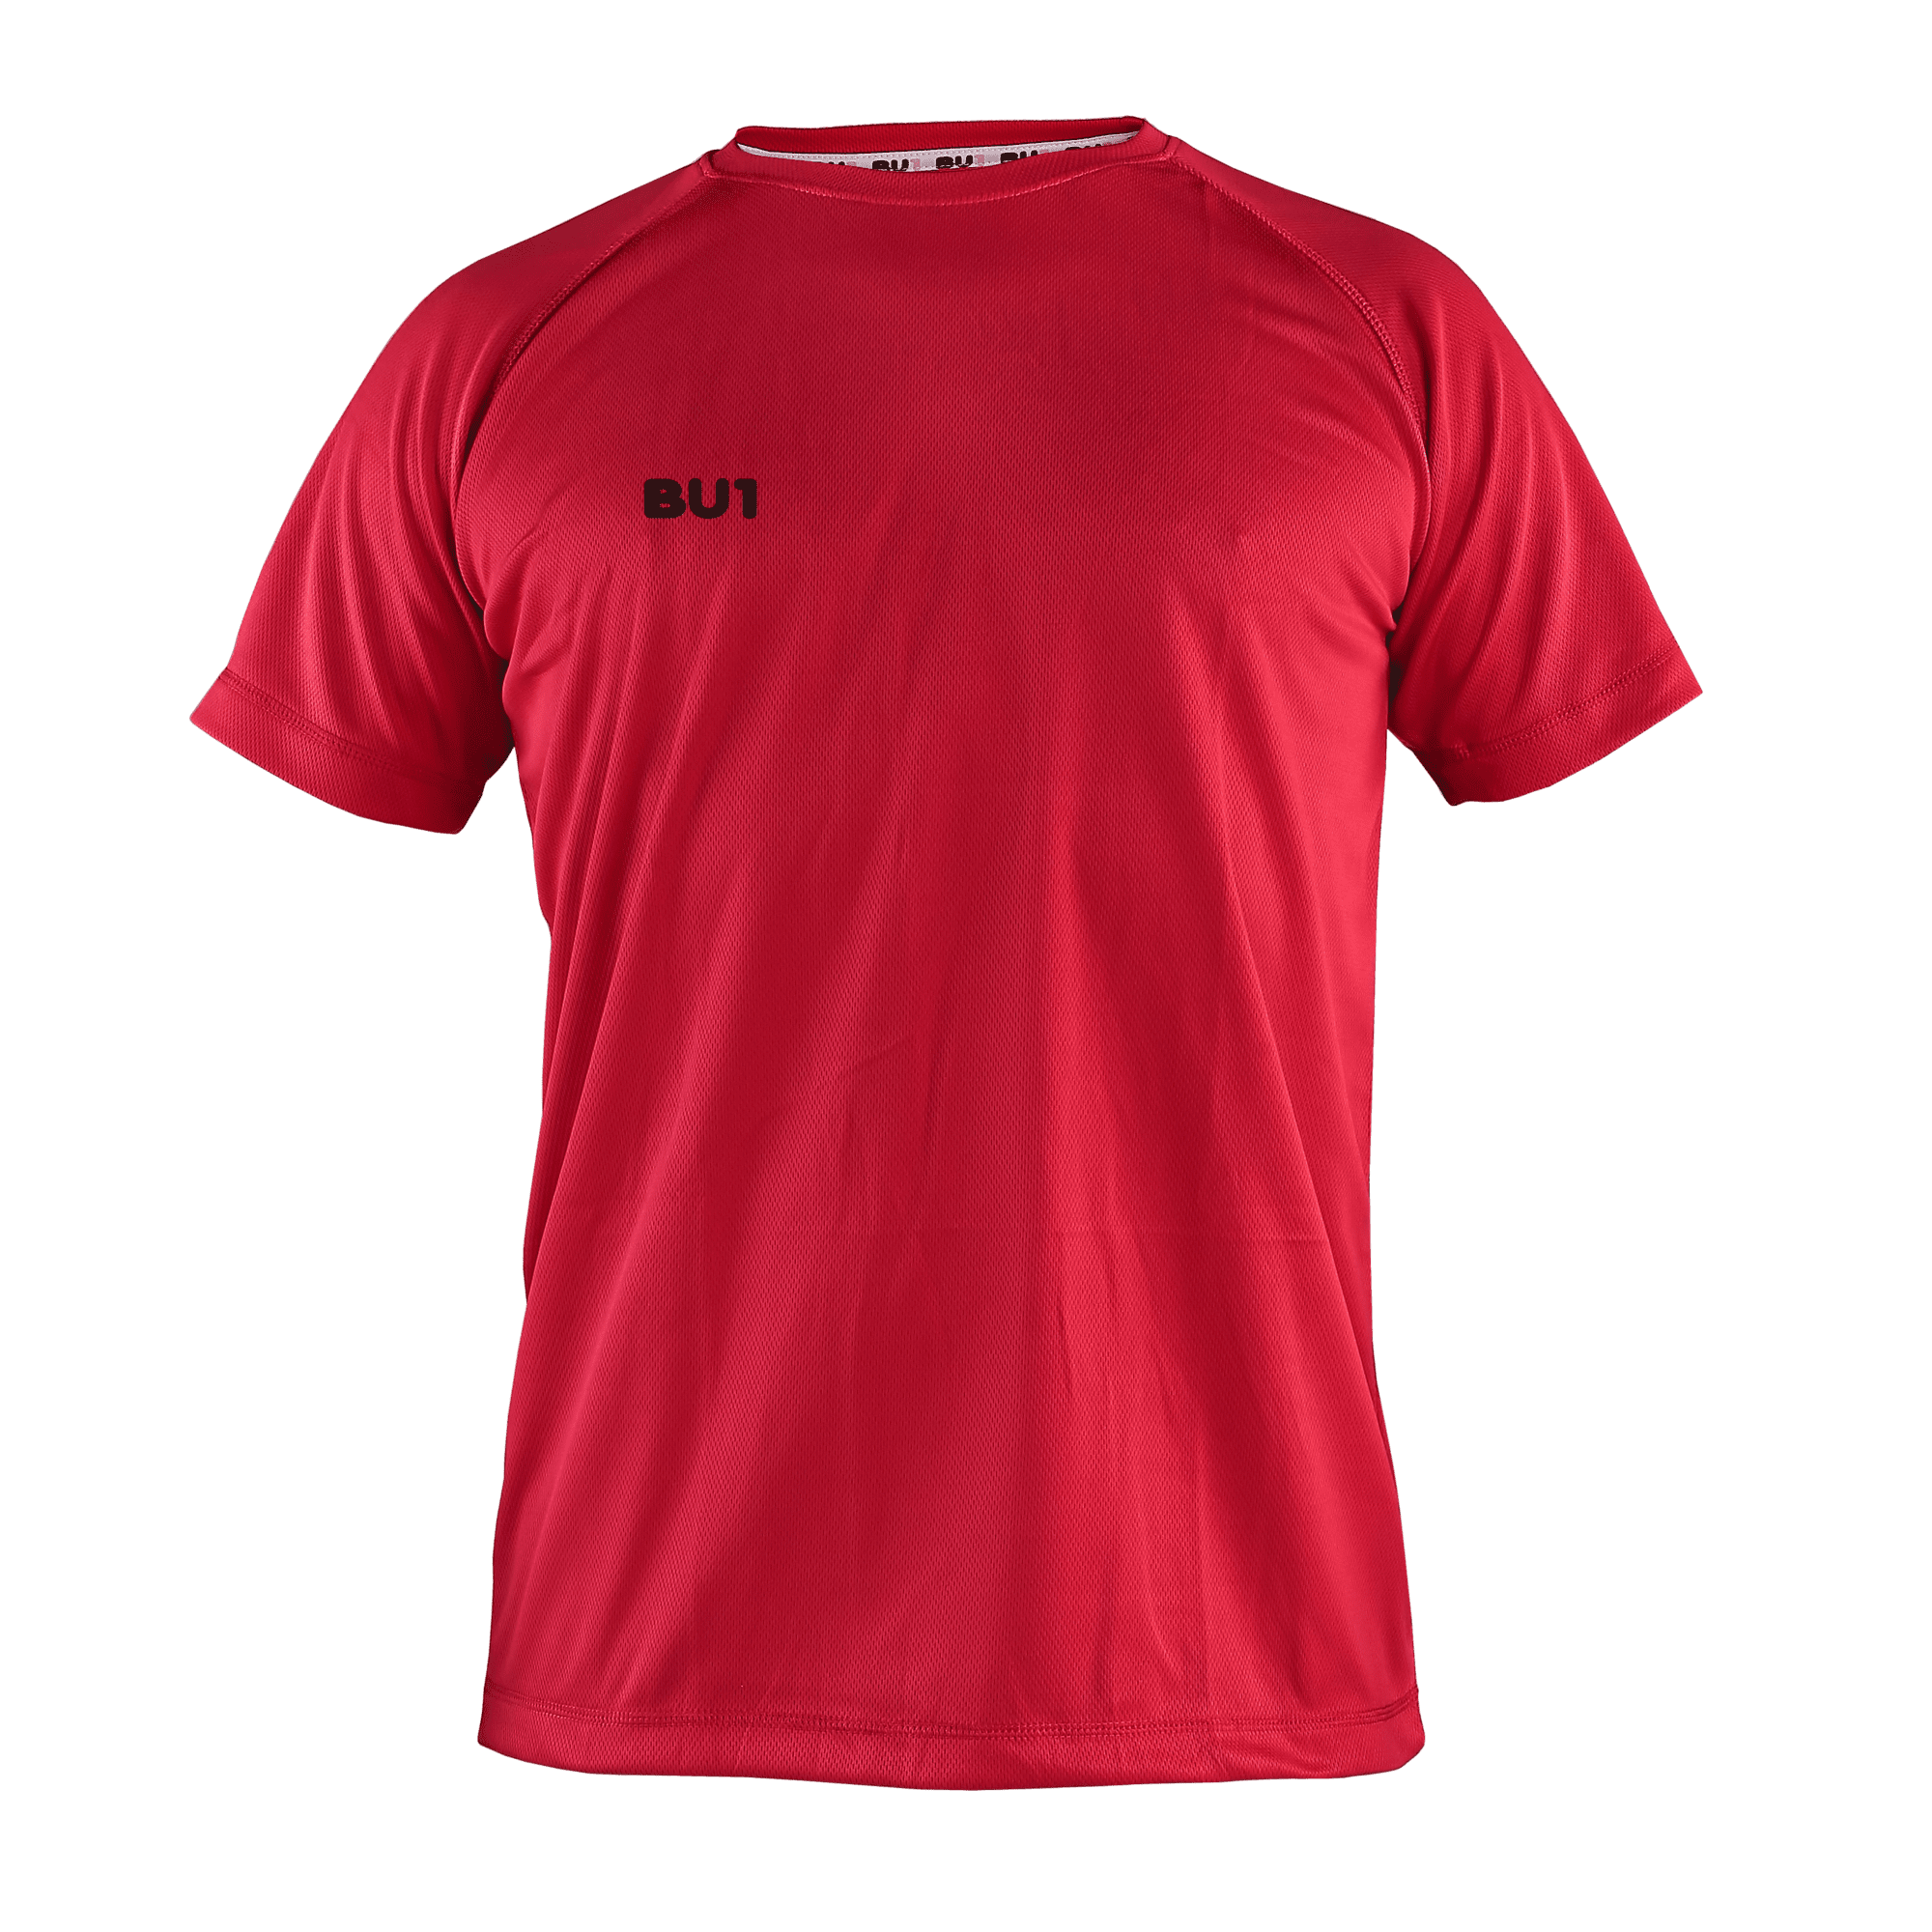 BU1 tréningové tričko červené